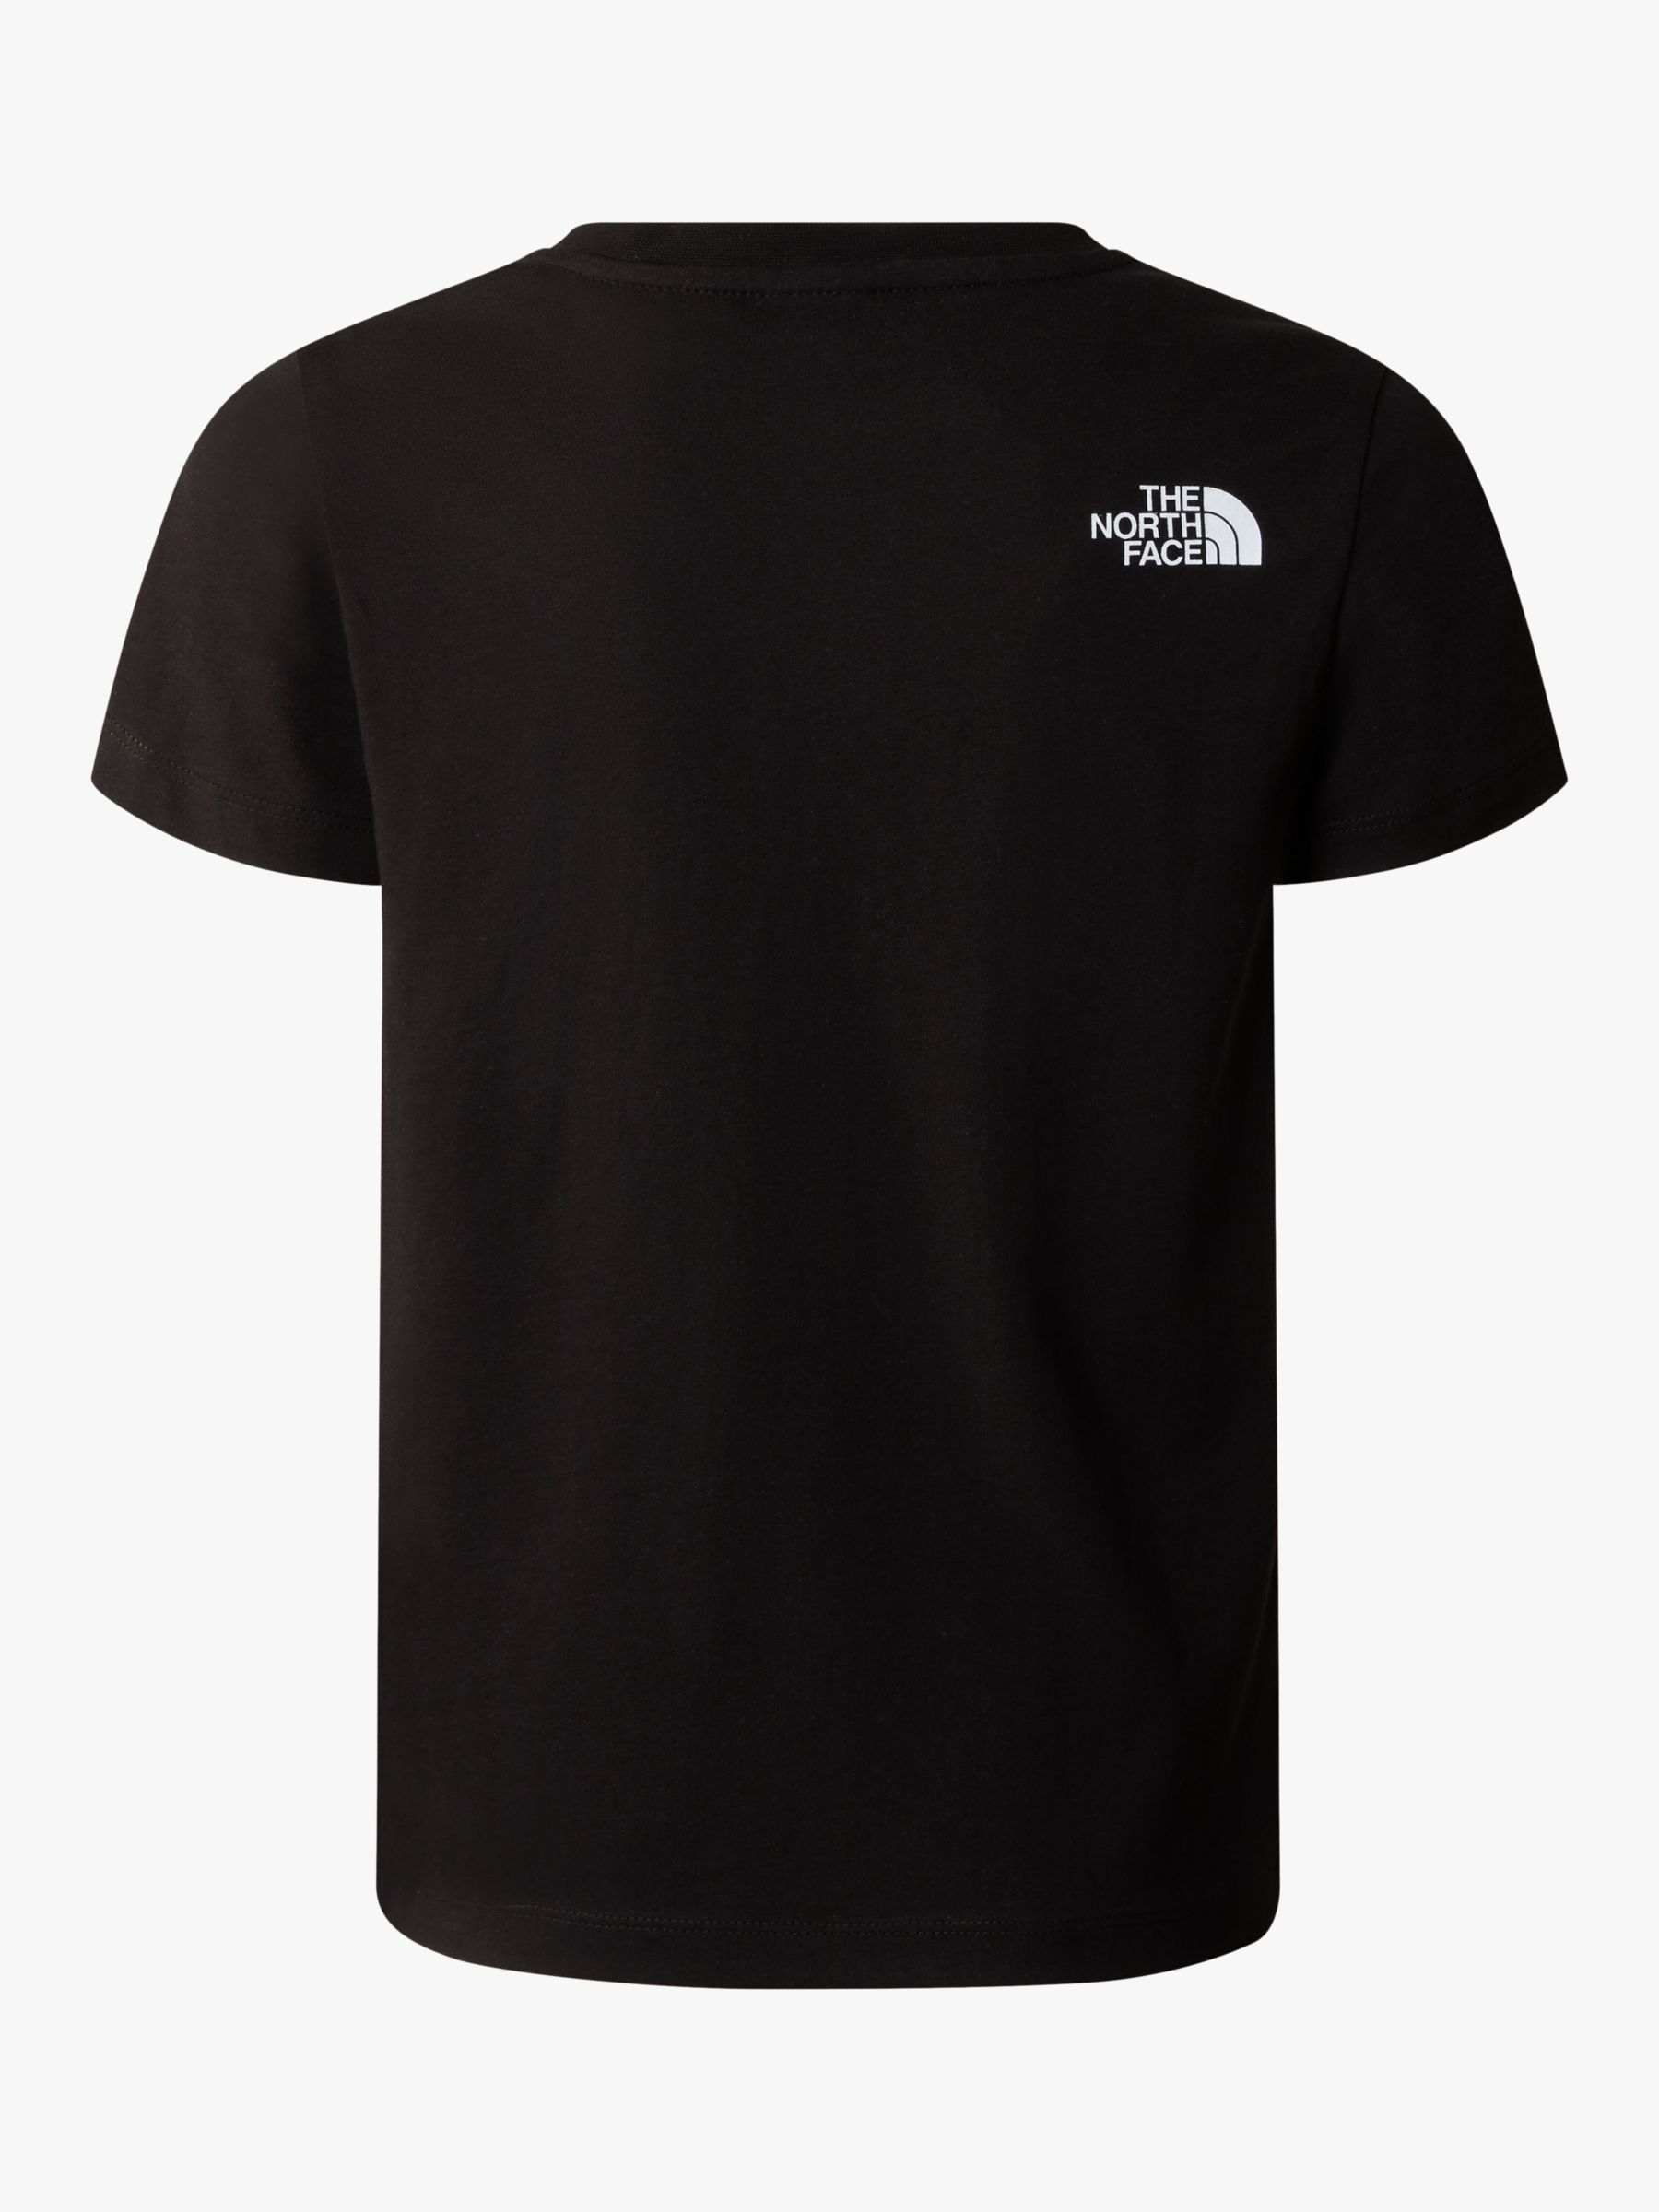 The North Face Kids' New Logo Short Sleeve T-Shirt, Black, M